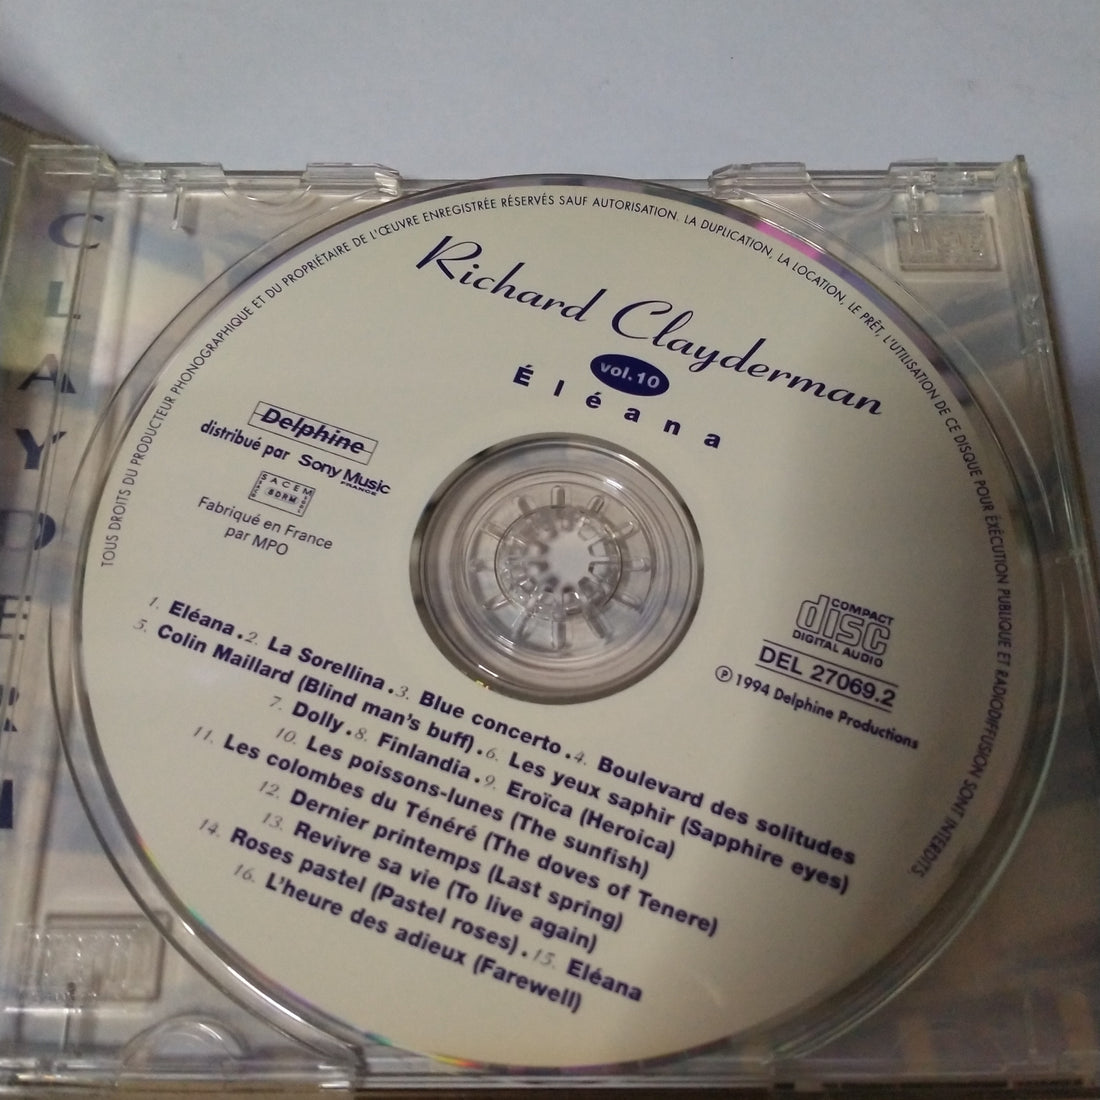 Richard Clayderman - ELEANA  (CD) (VG+)